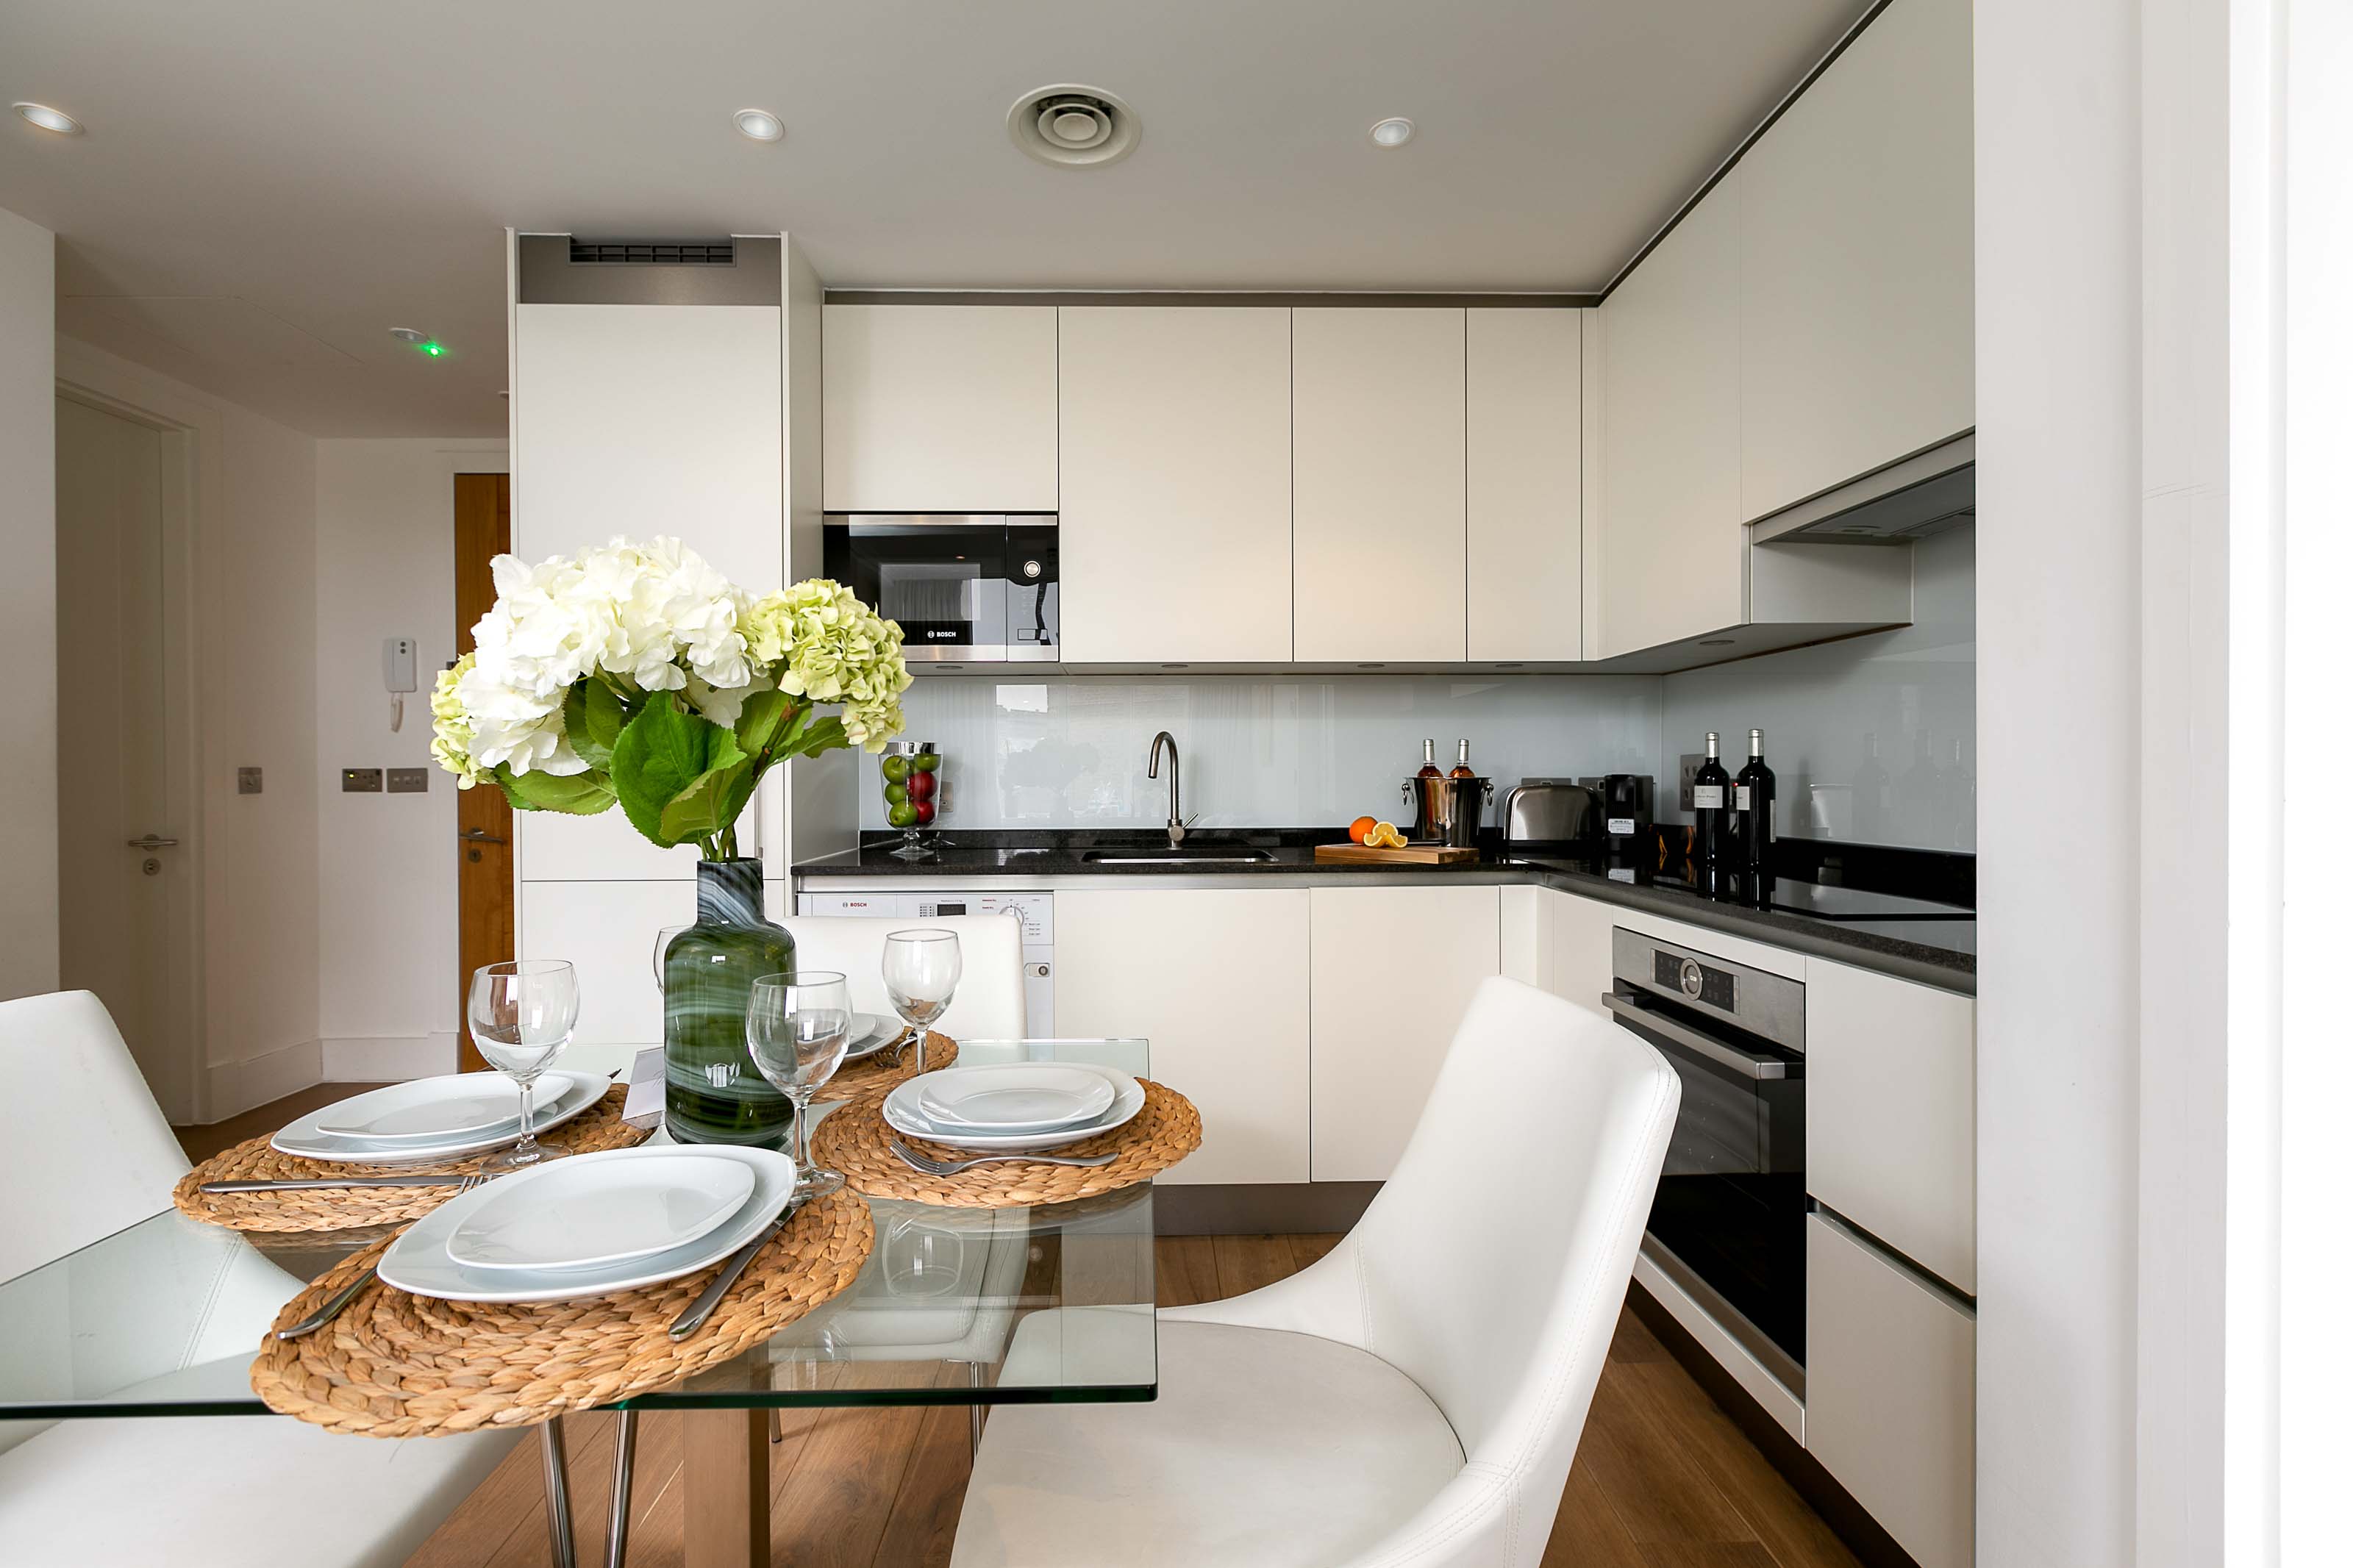 Lovelydays luxury service apartment rental - London - Covent Garden - Prince's House 506 - Lovelysuite - 2 bedrooms - 2 bathrooms - Luxury kitchen - b7bc760f8451 - Lovelydays